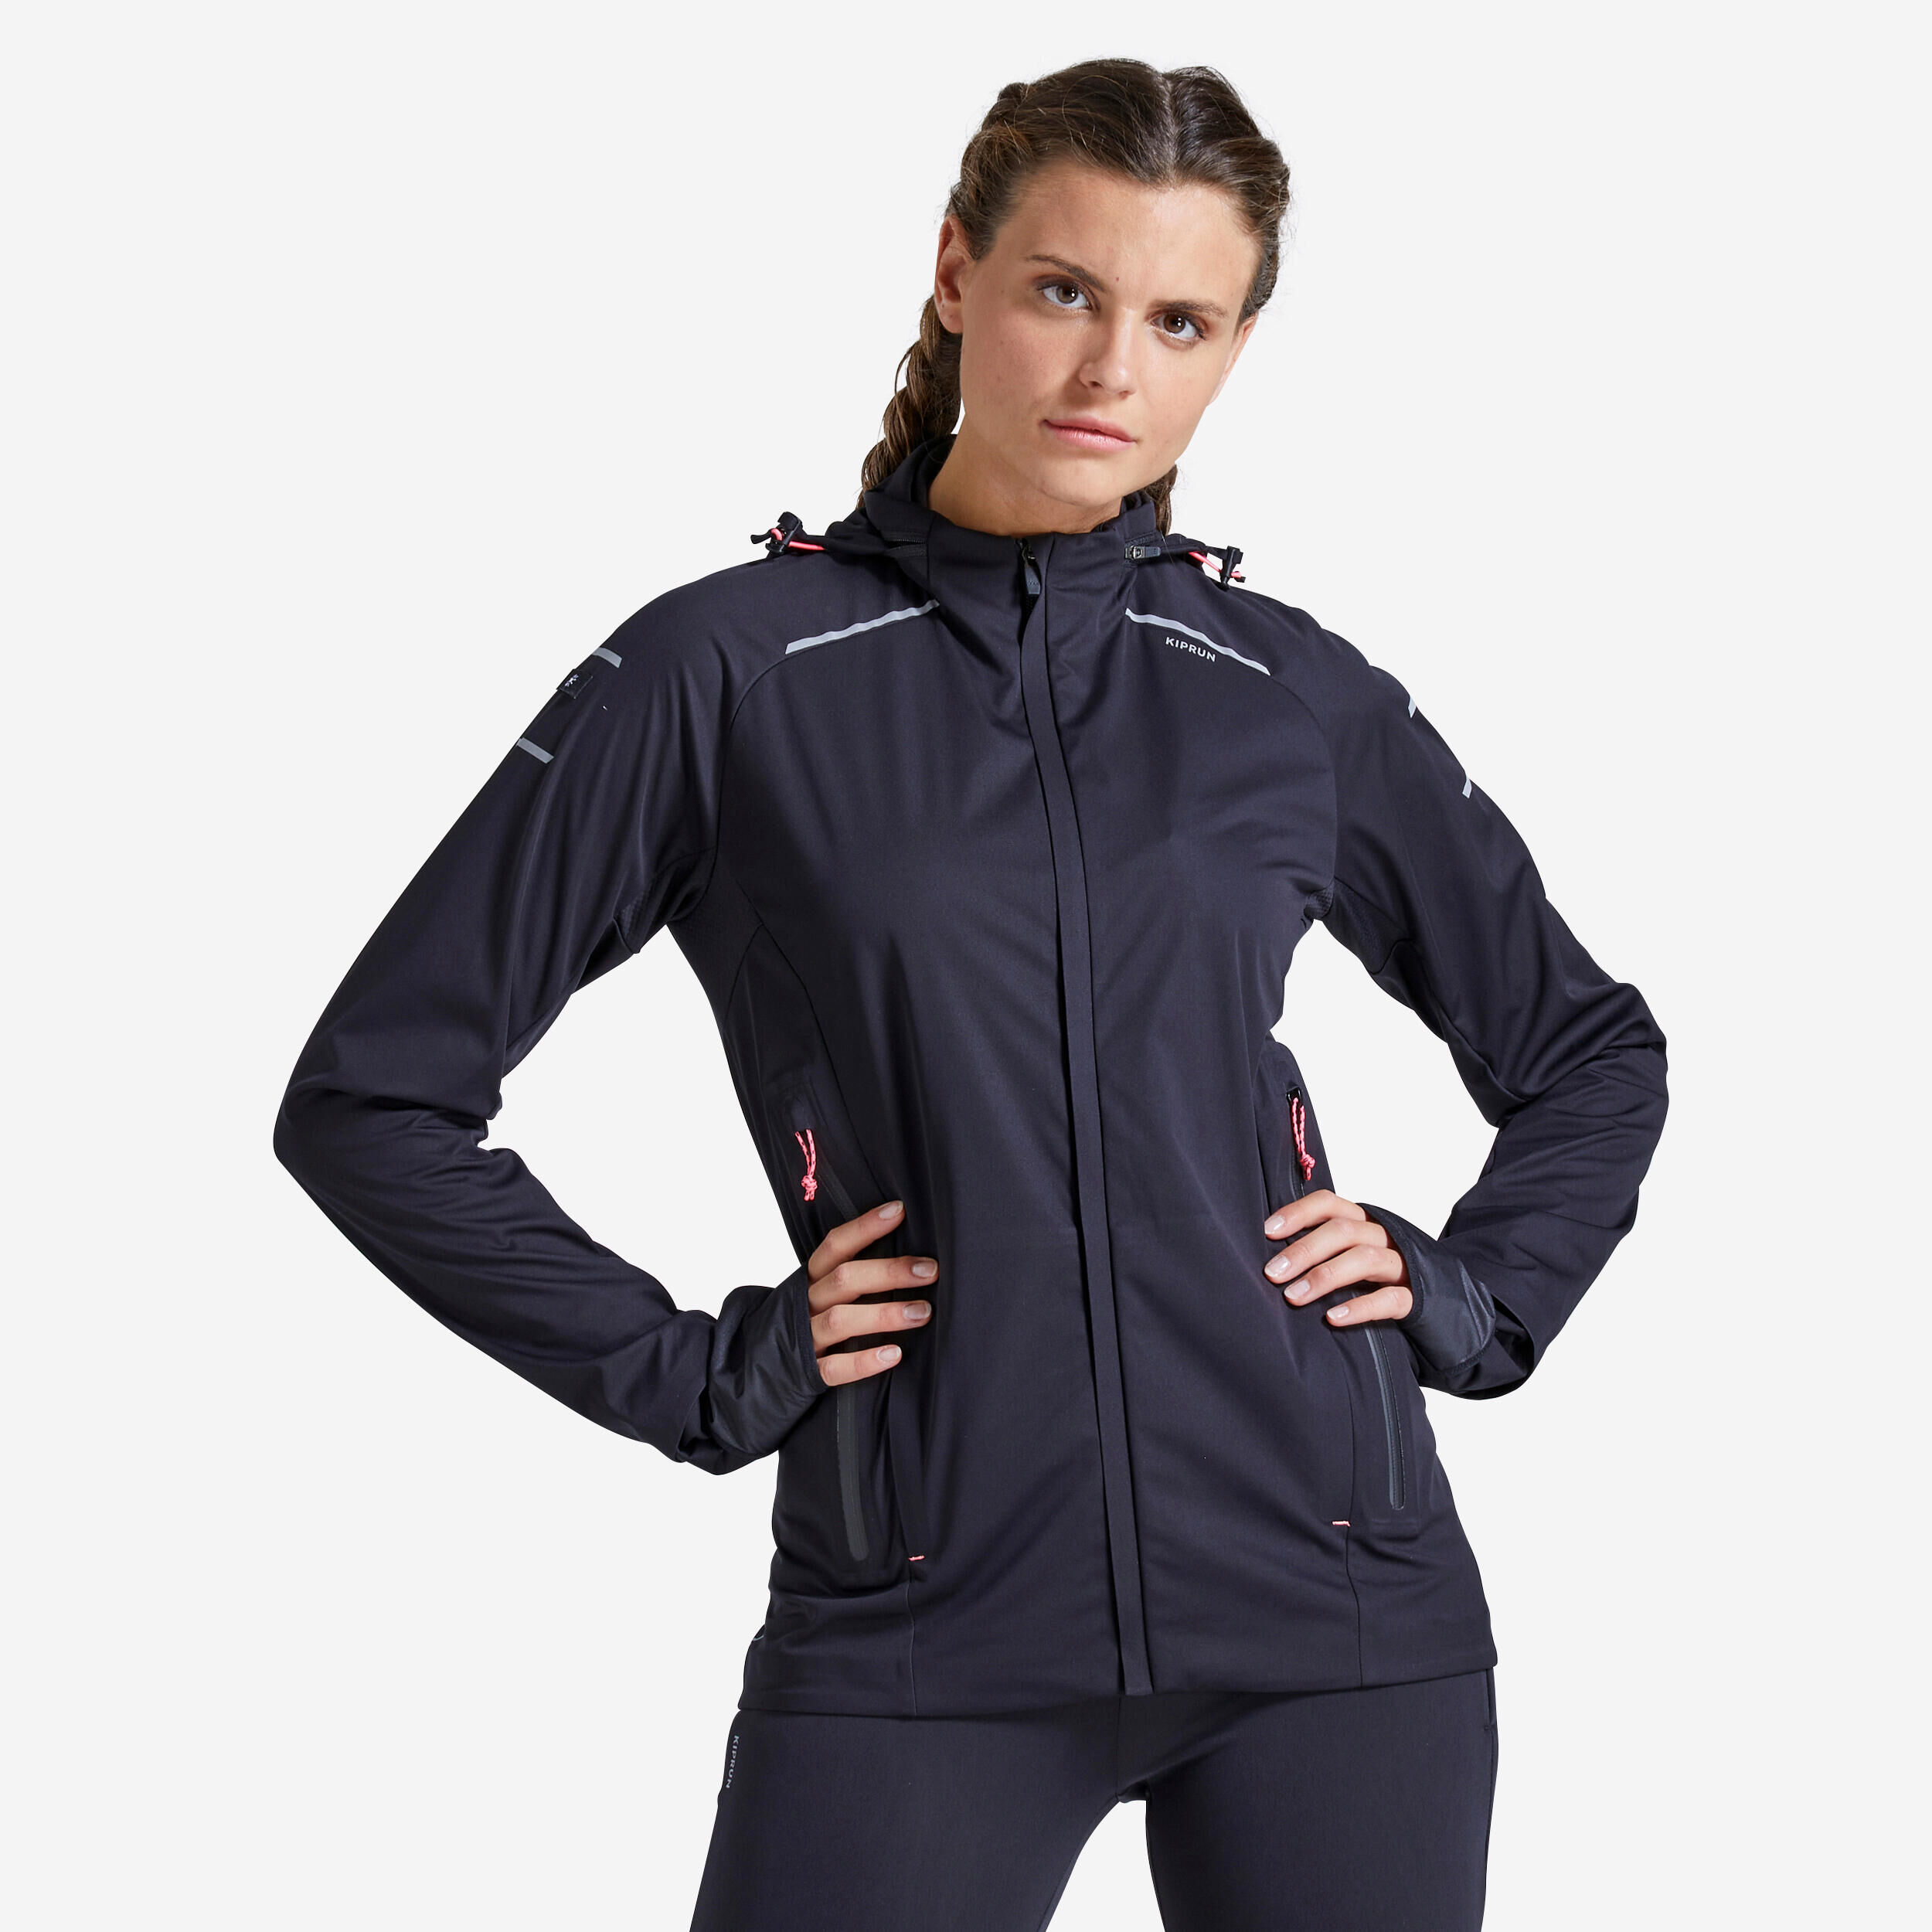 KIPRUN Kiprun Warm Regul Women's Running Water Repellent Windproof Jacket - Black